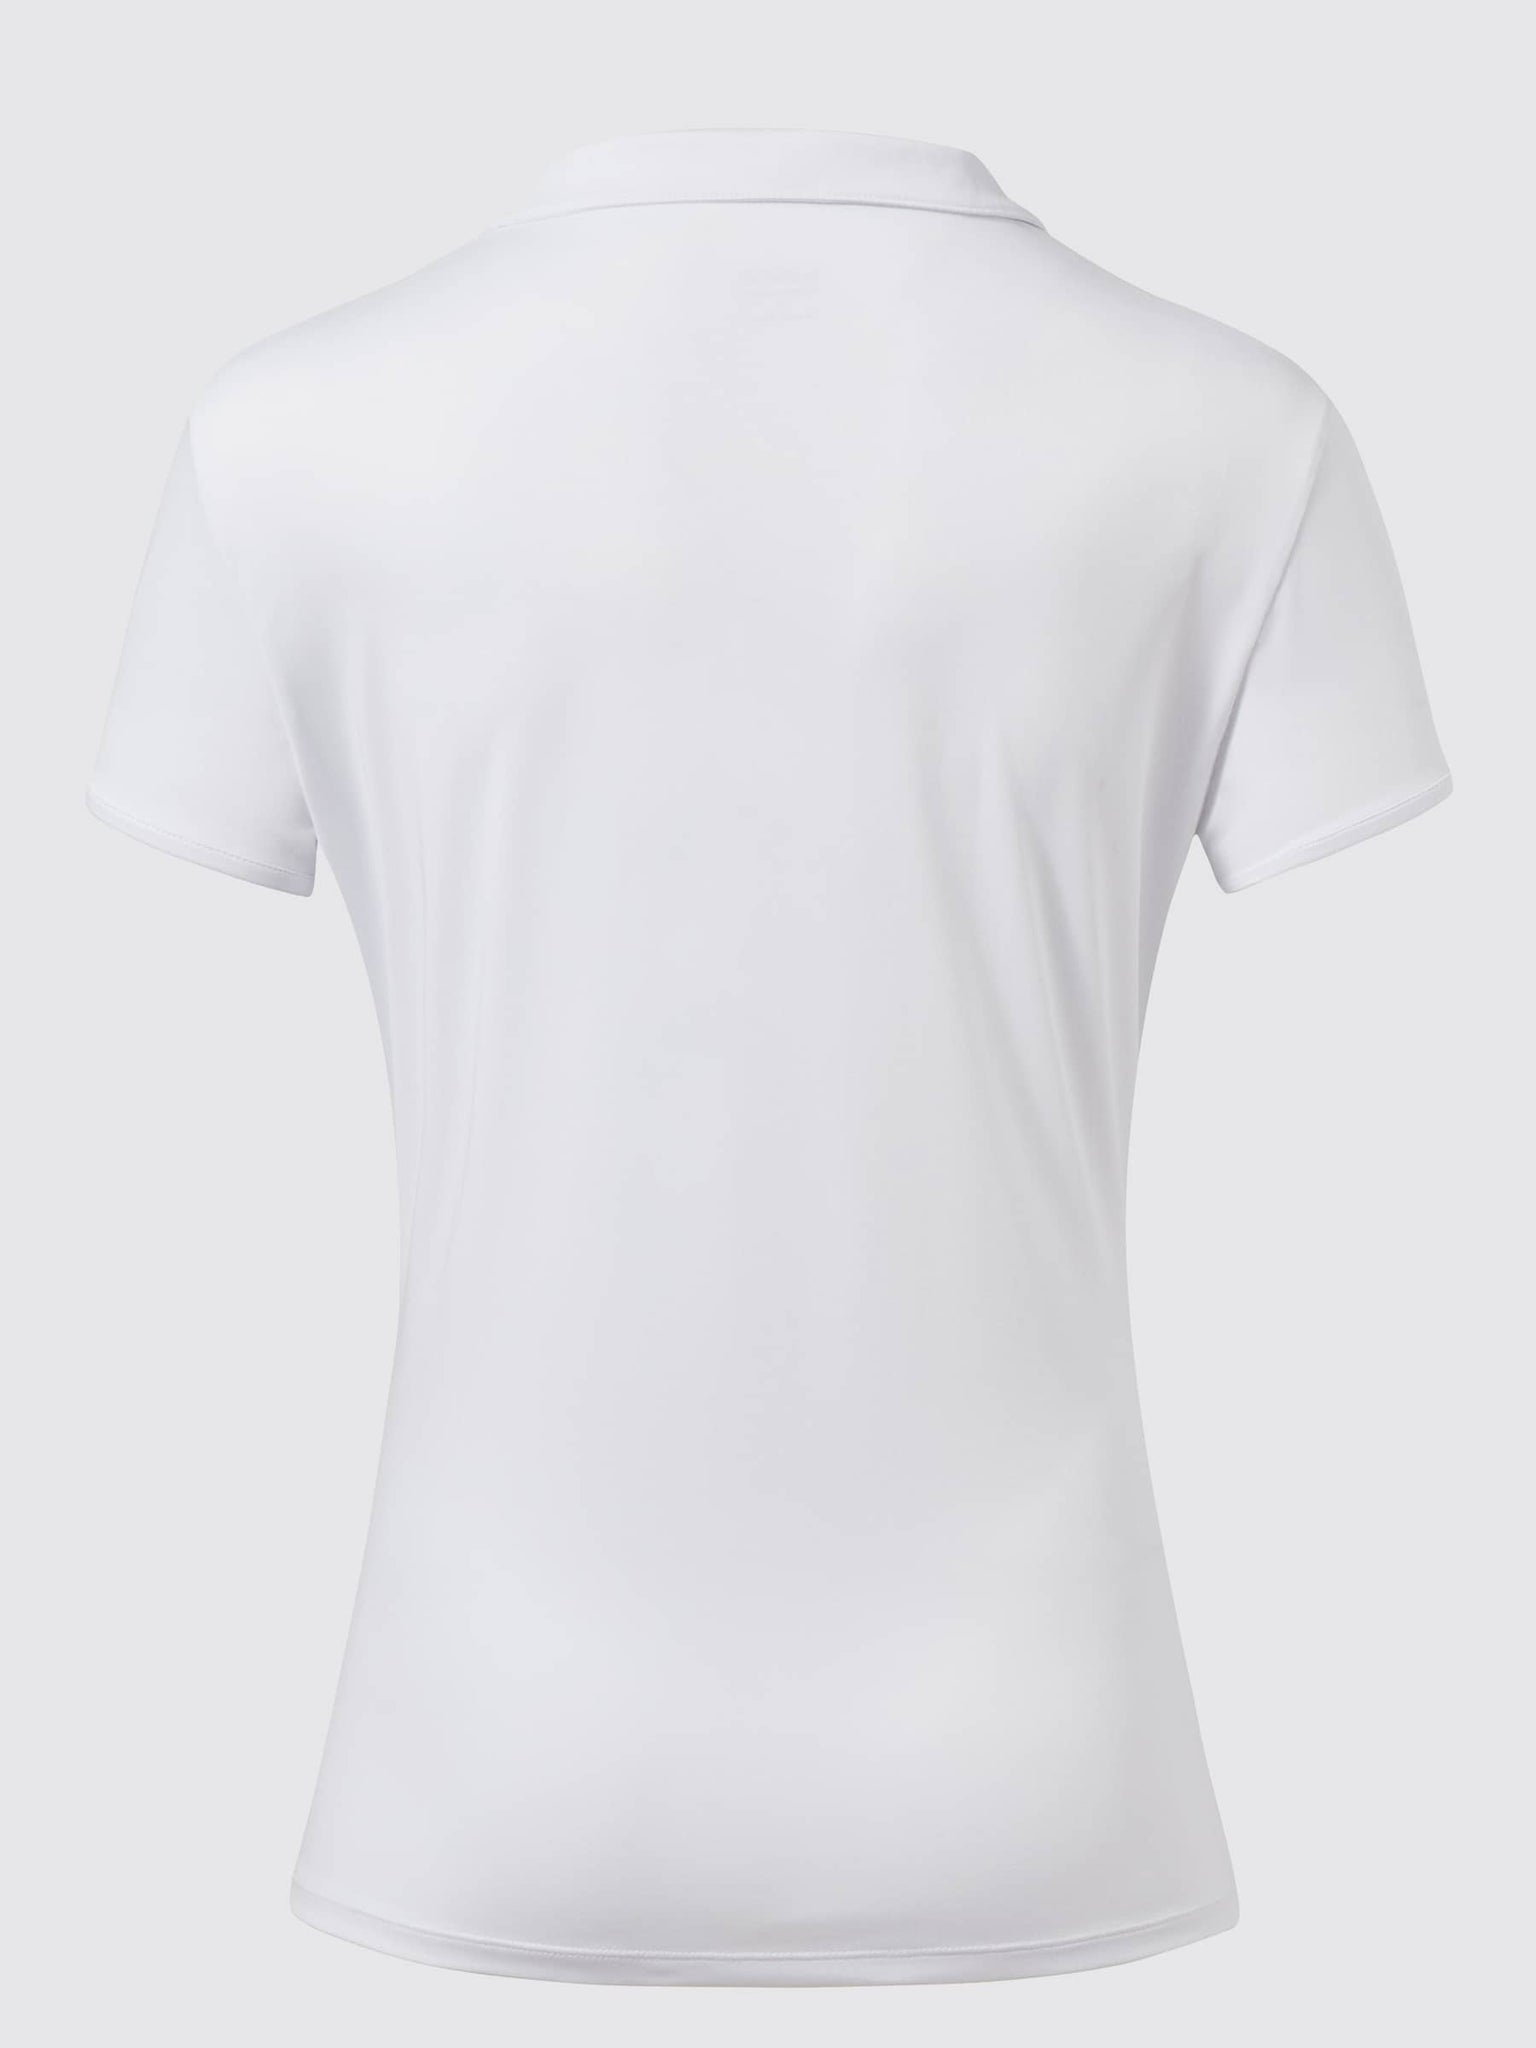 Willit Women's Golf Polo Short Sleeve Shirts_White2